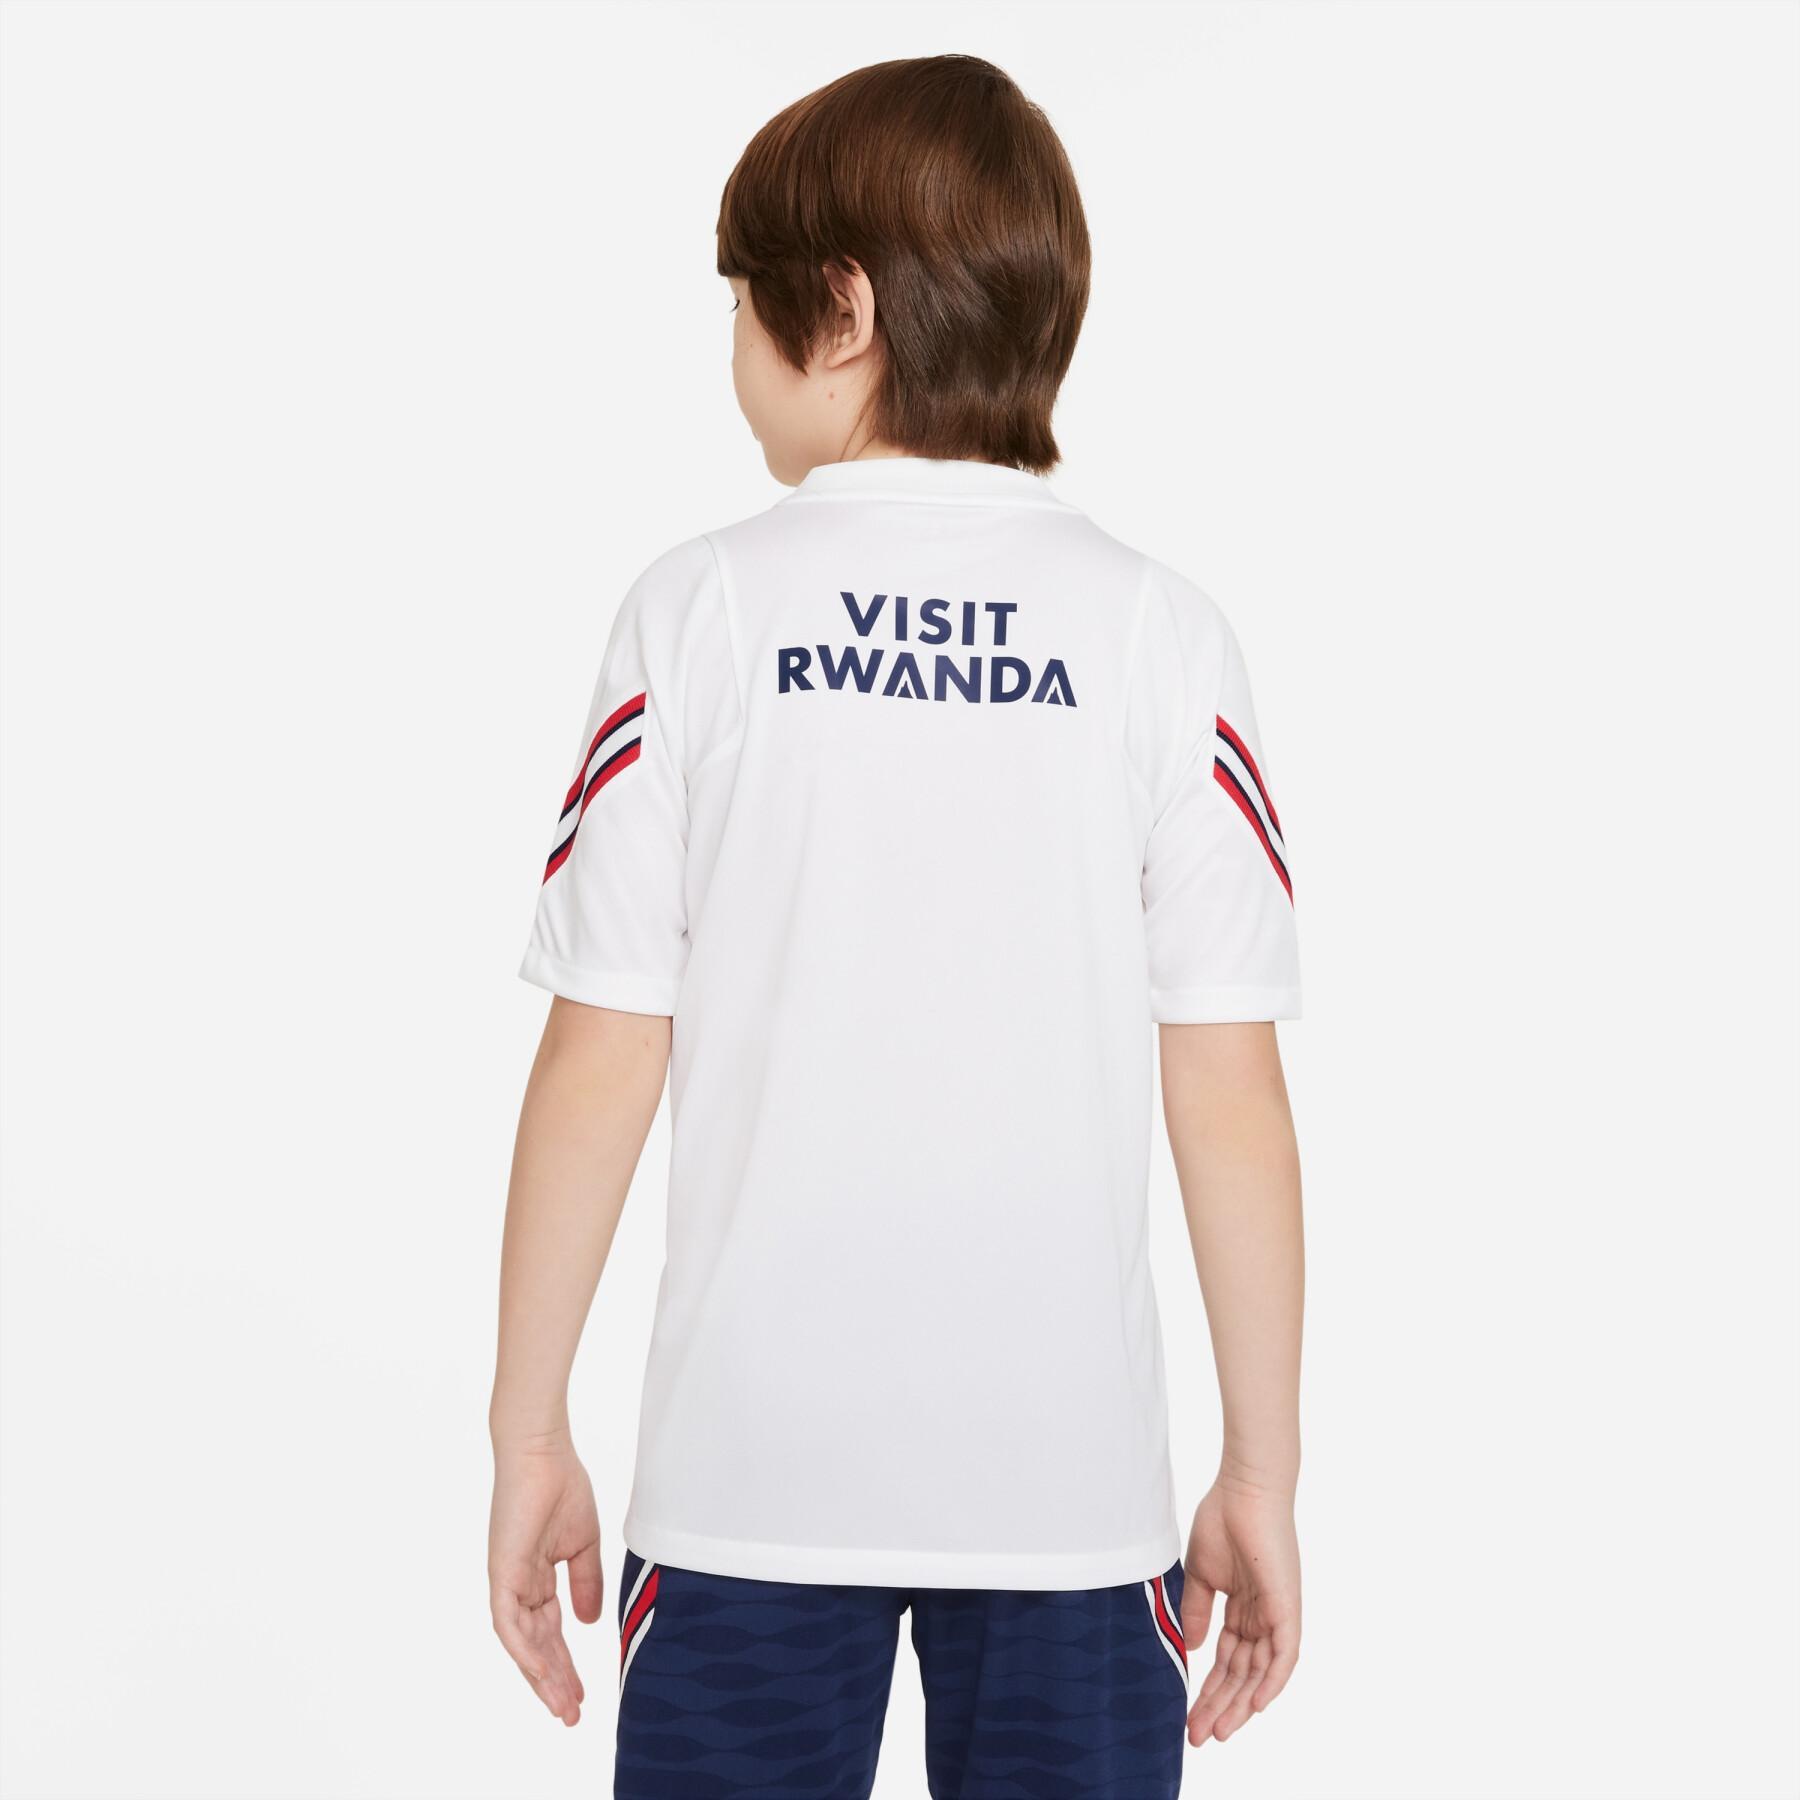 Child's T-shirt PSG Dynamic Fit Strike 2021/22